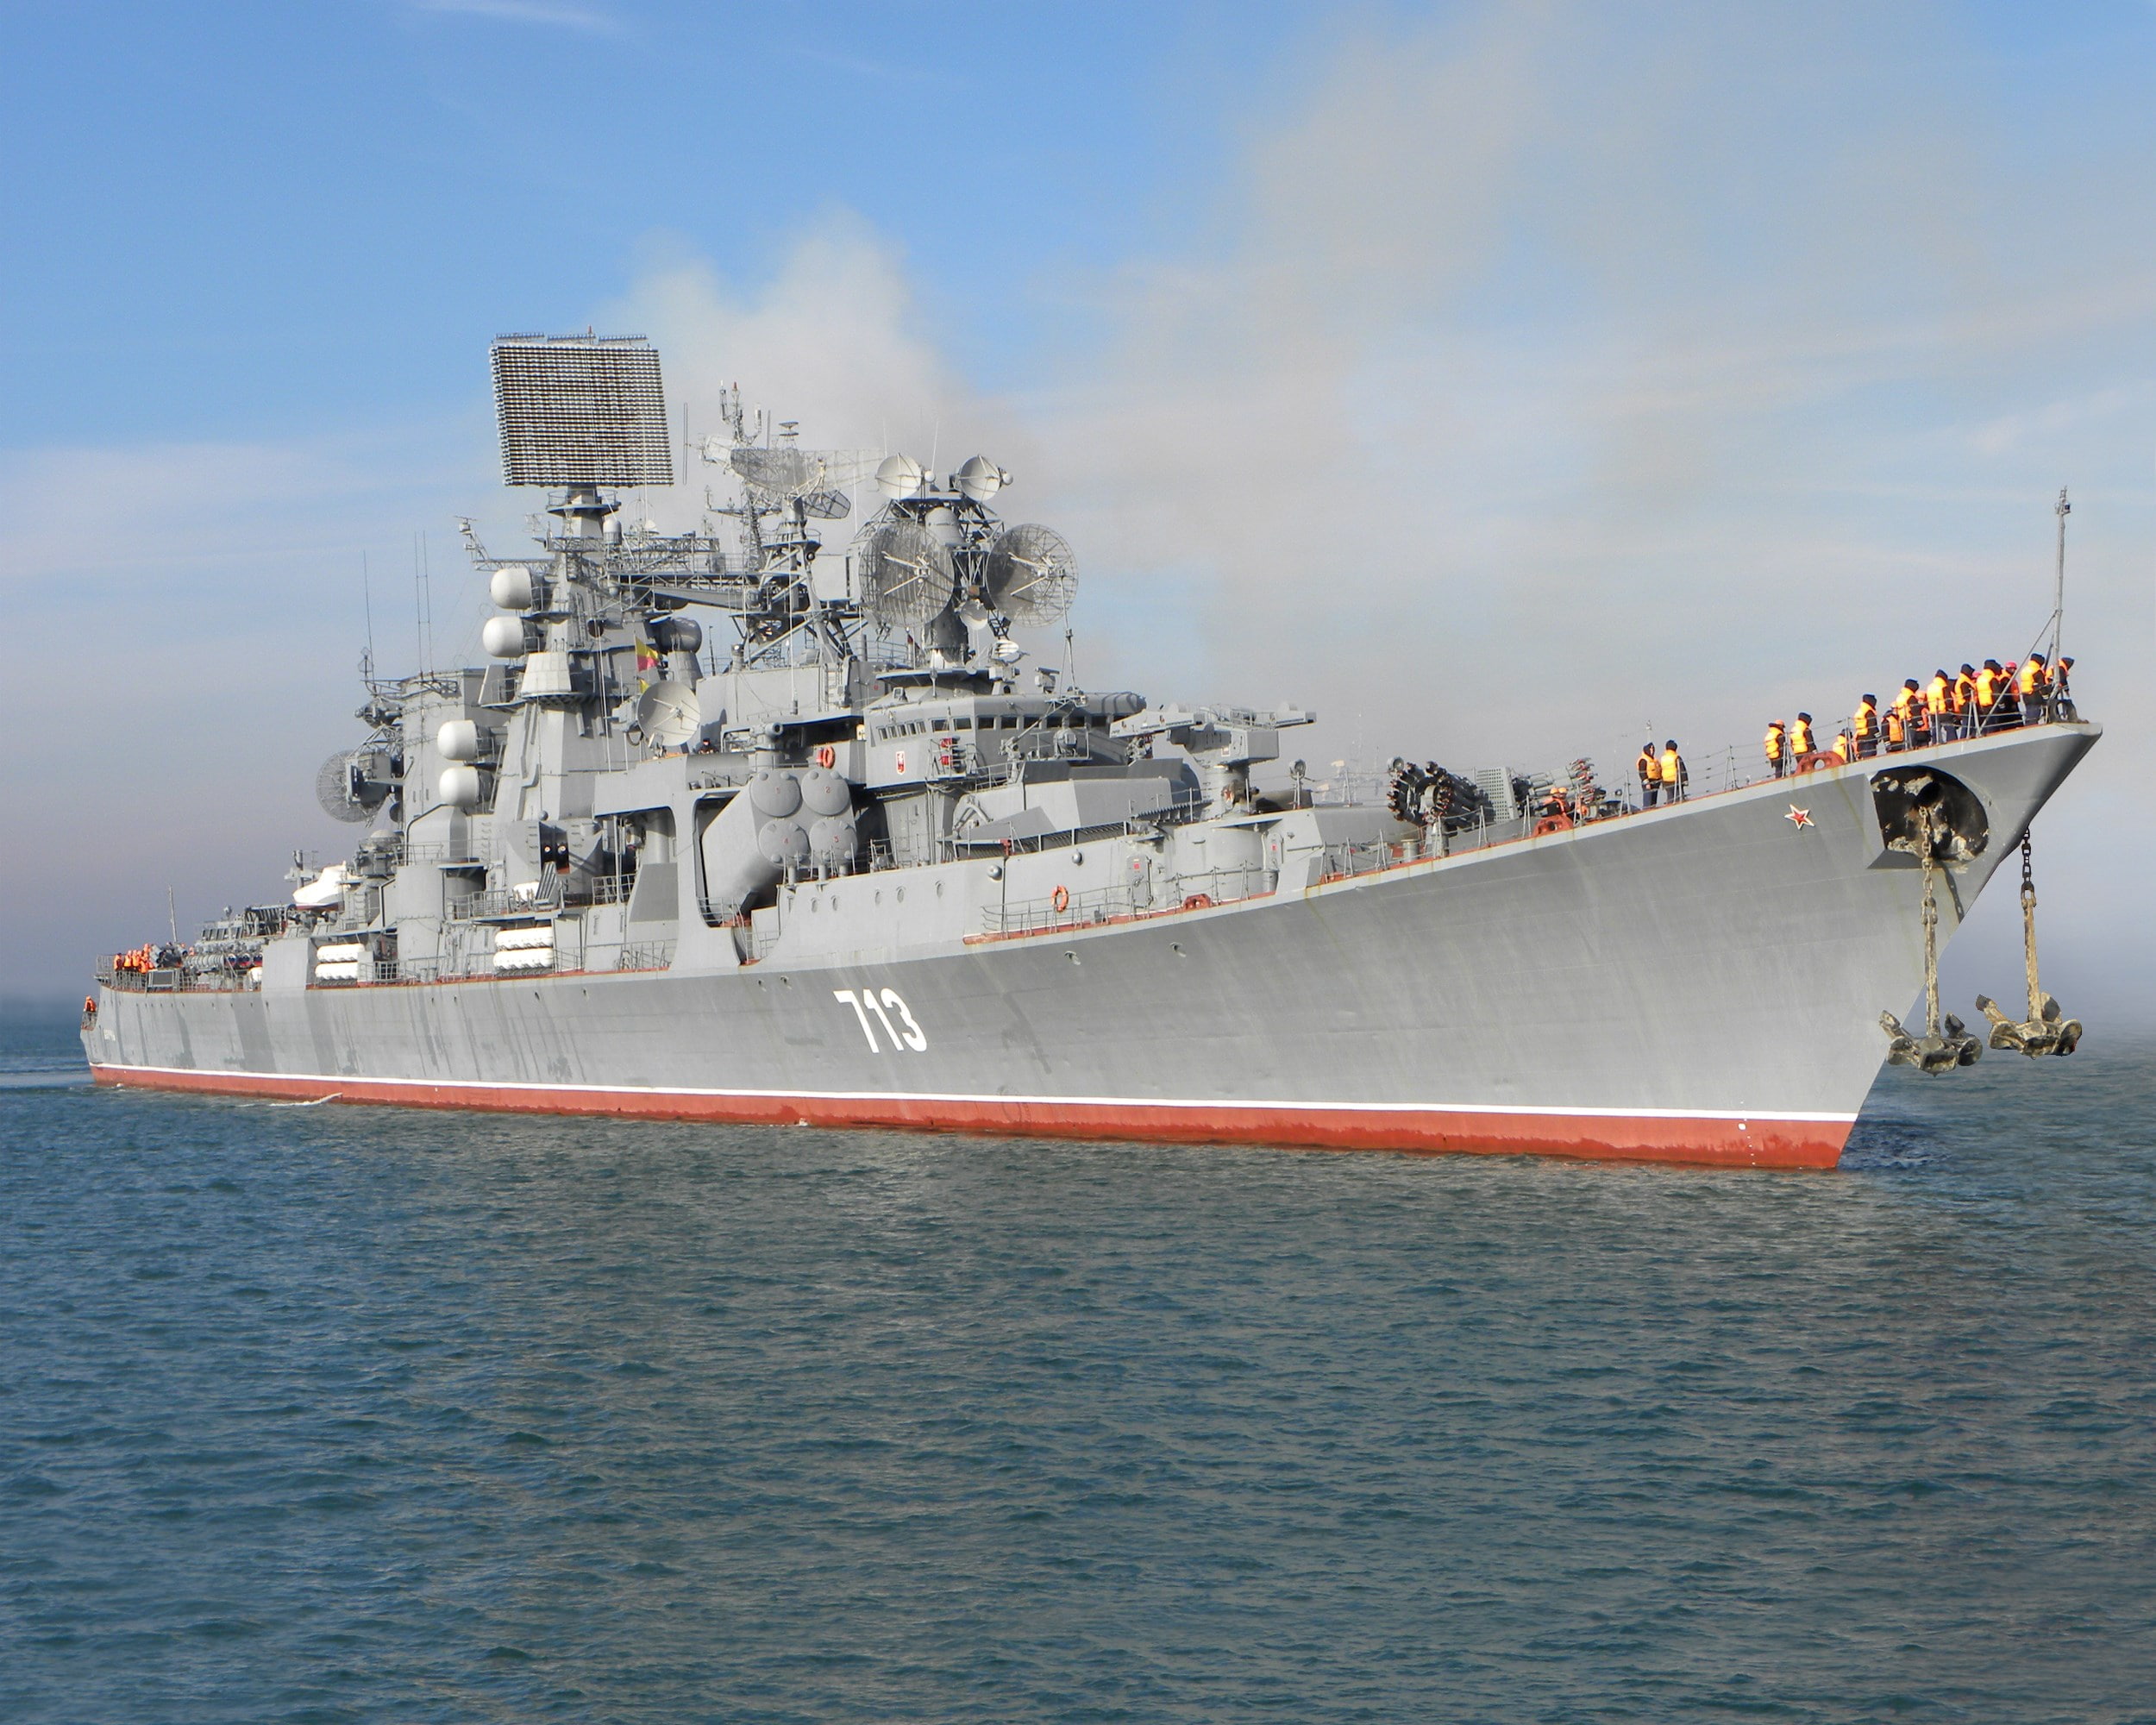 russian navy, nautical vessel, transportation, water, sea, ship